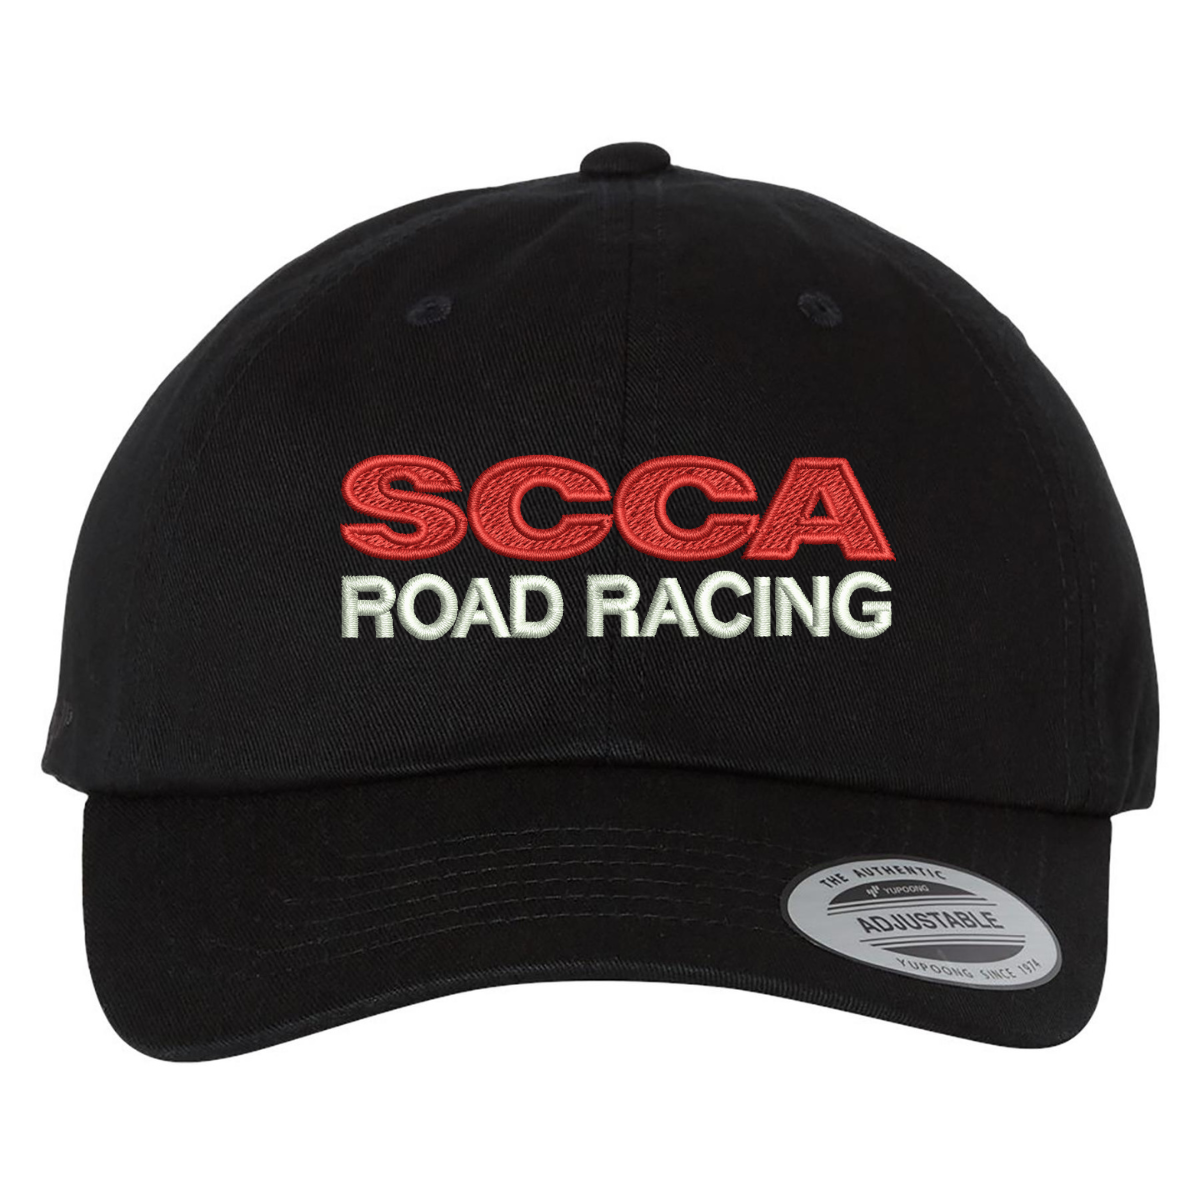 SCCA Road Racing Low Profile Dad's Cap